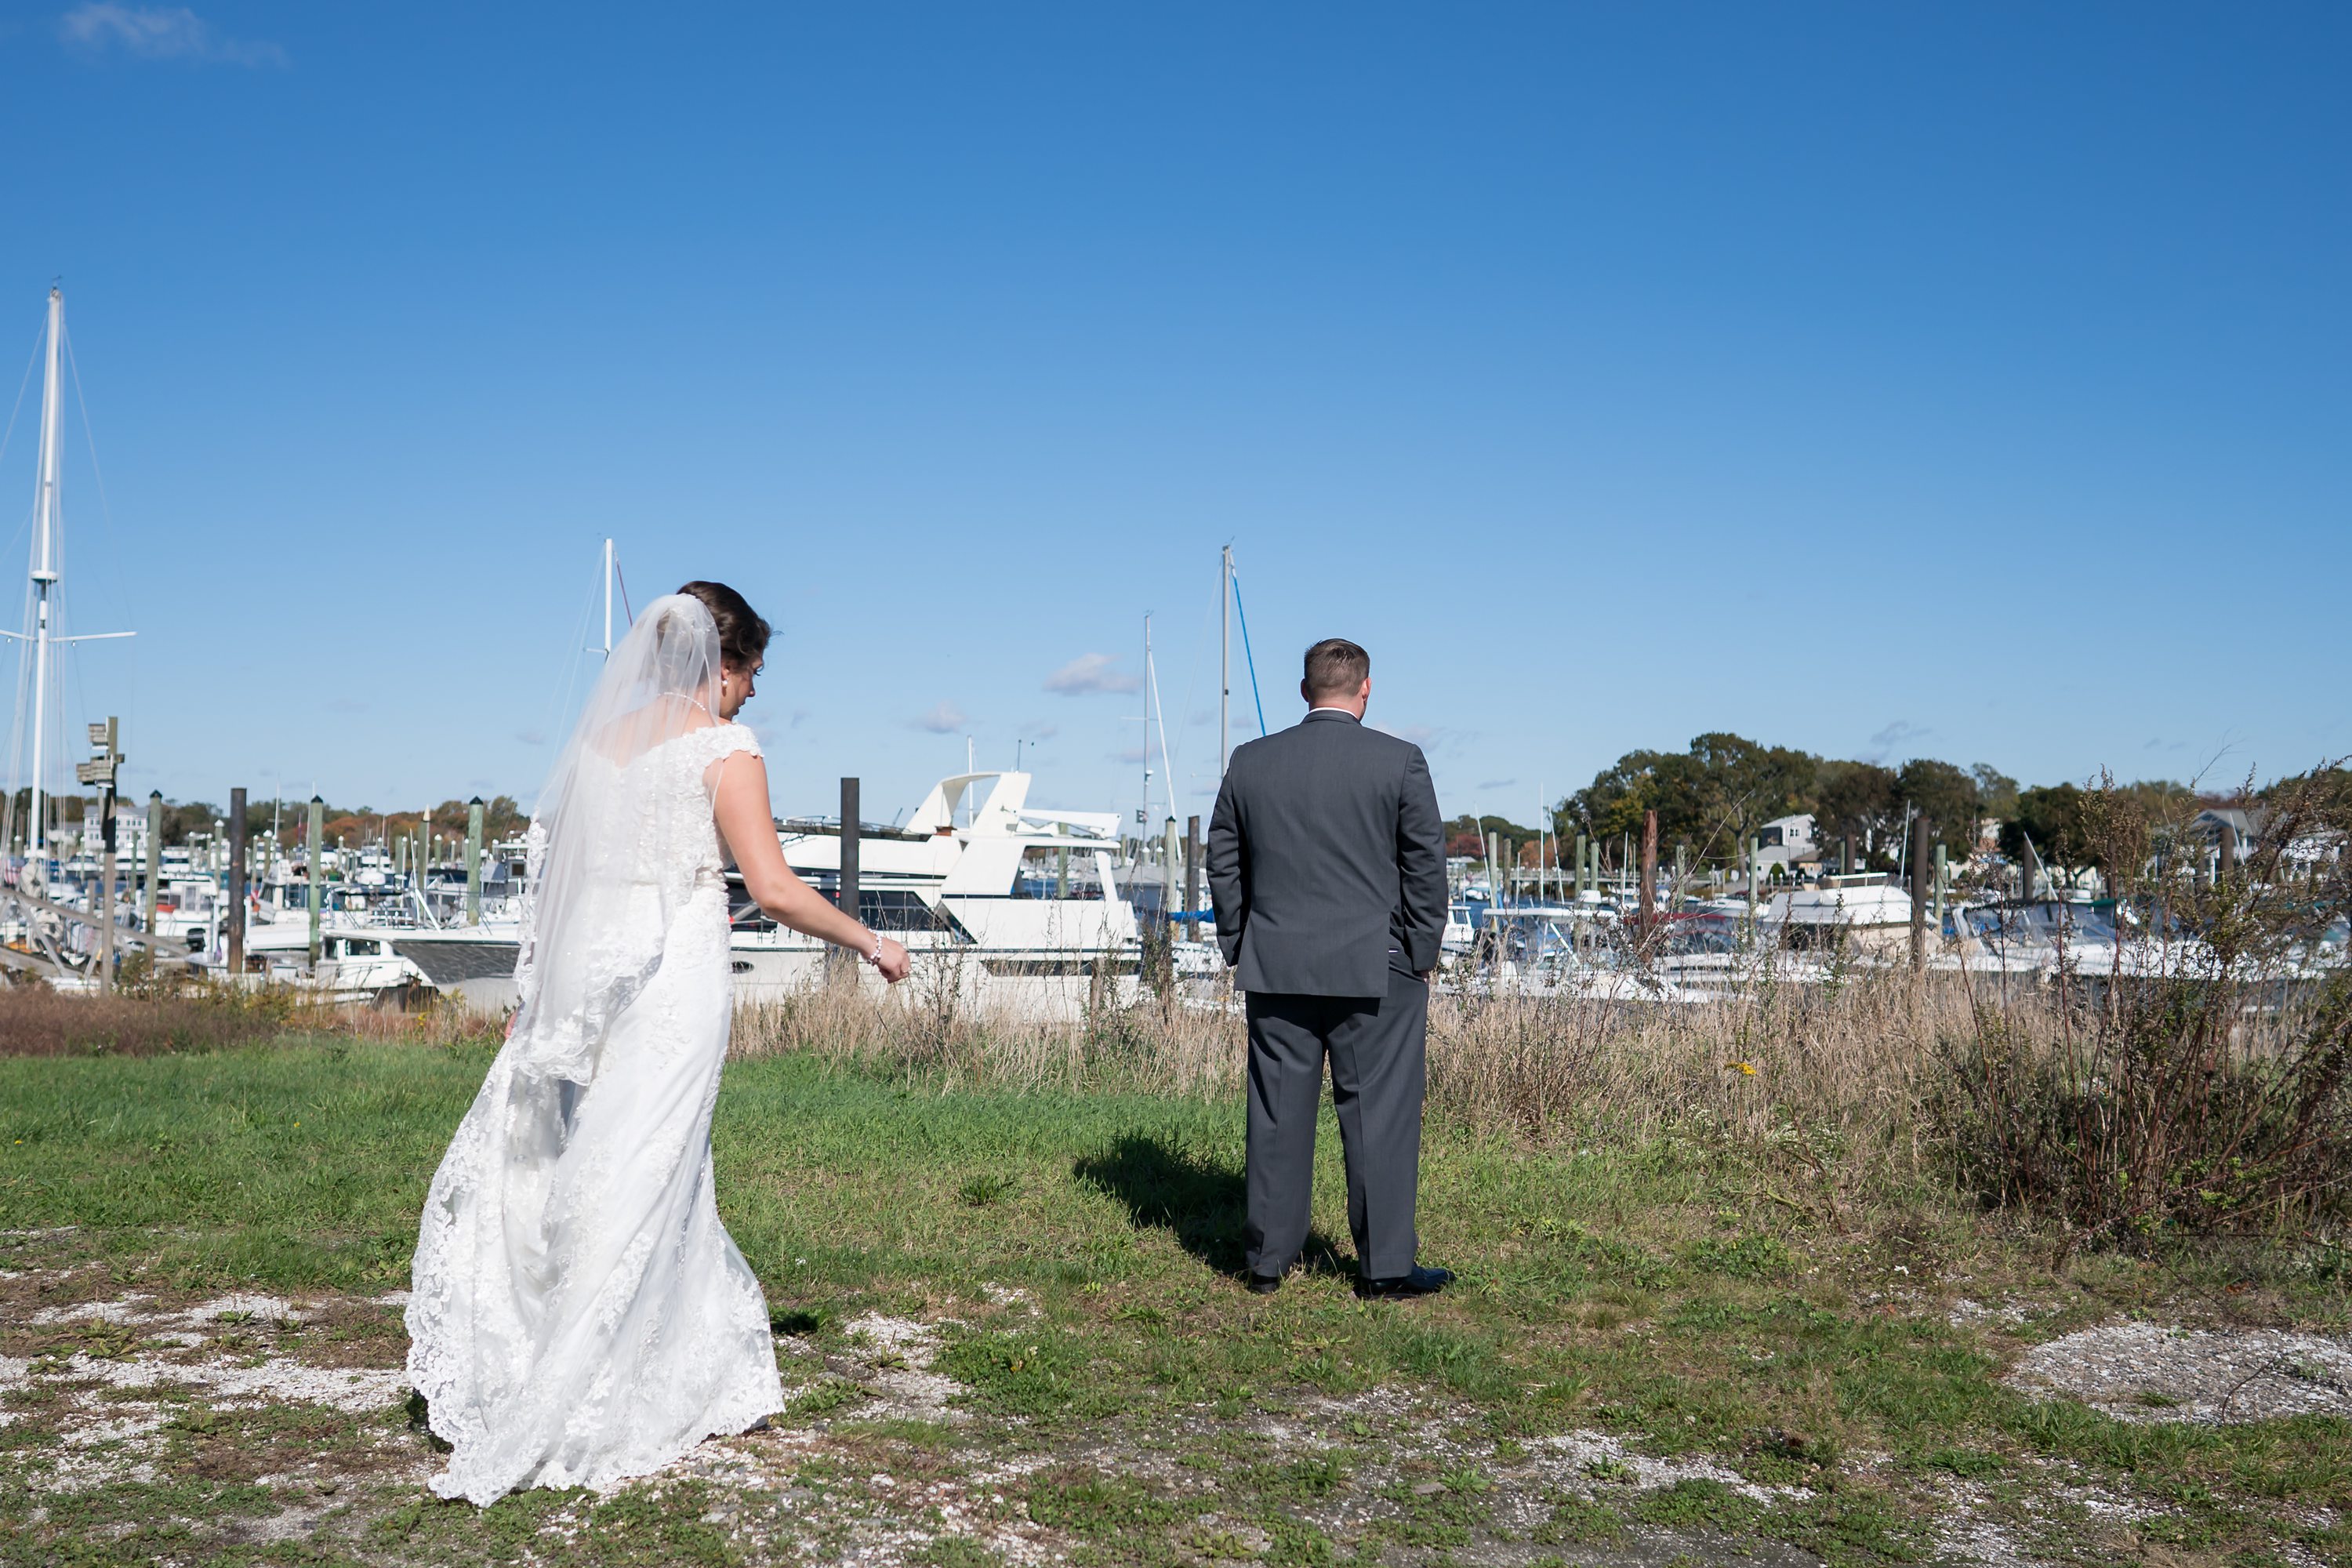 Sharon Wedding Photographer,Weddings Near Water,First Look